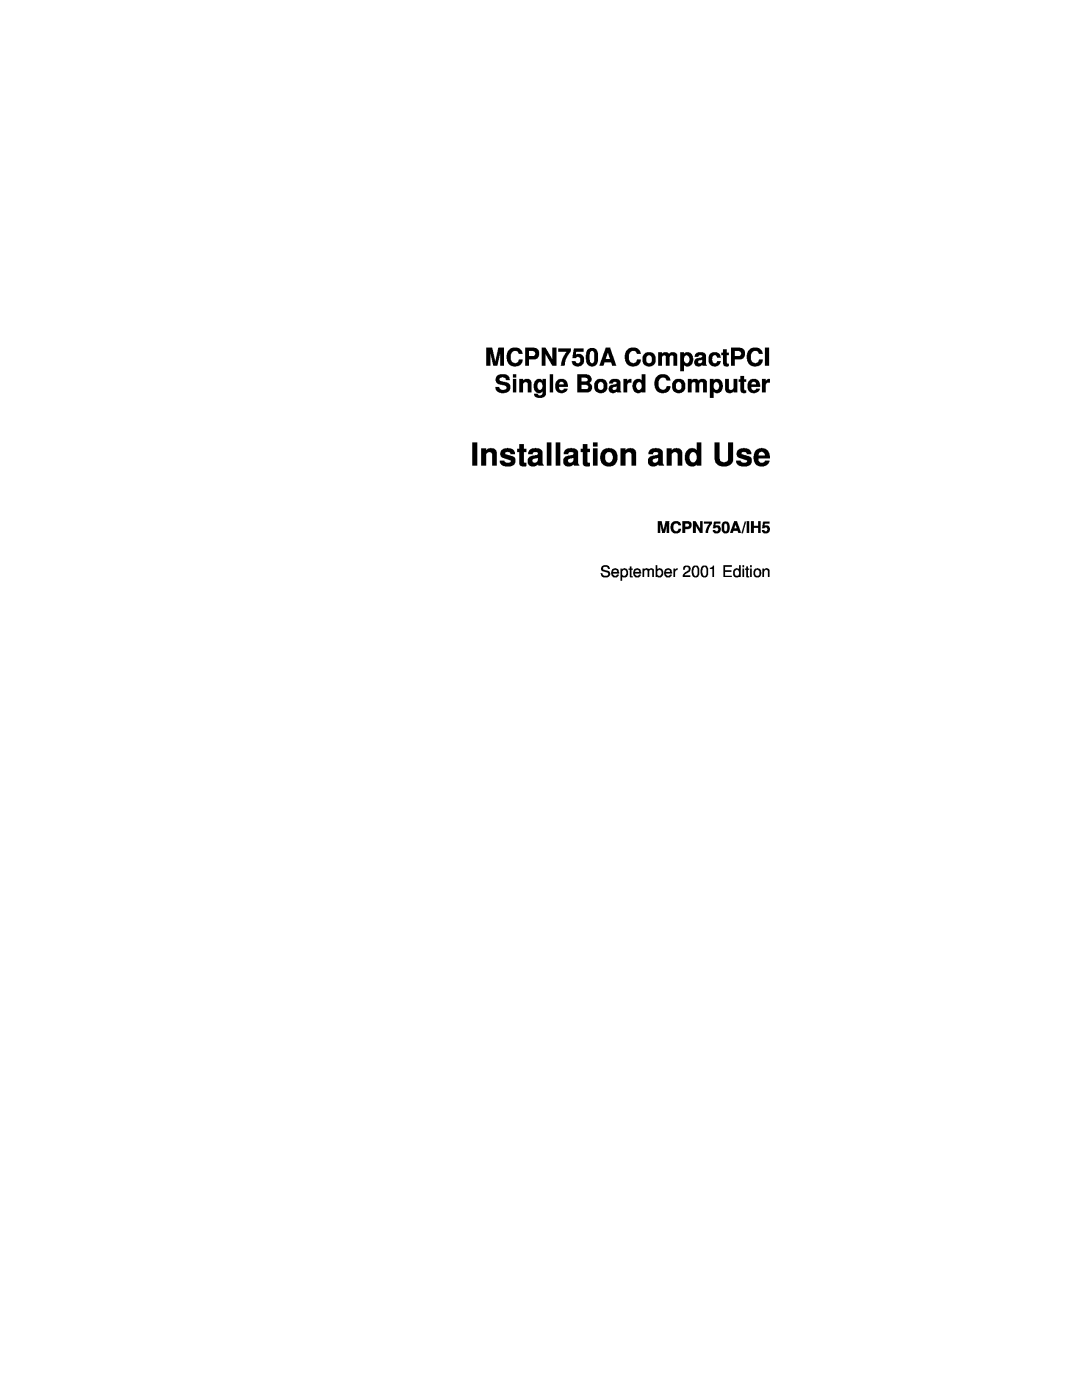 Motorola manual Installation and Use, MCPN750A CompactPCI Single Board Computer, MCPN750A/IH5, September 2001 Edition 